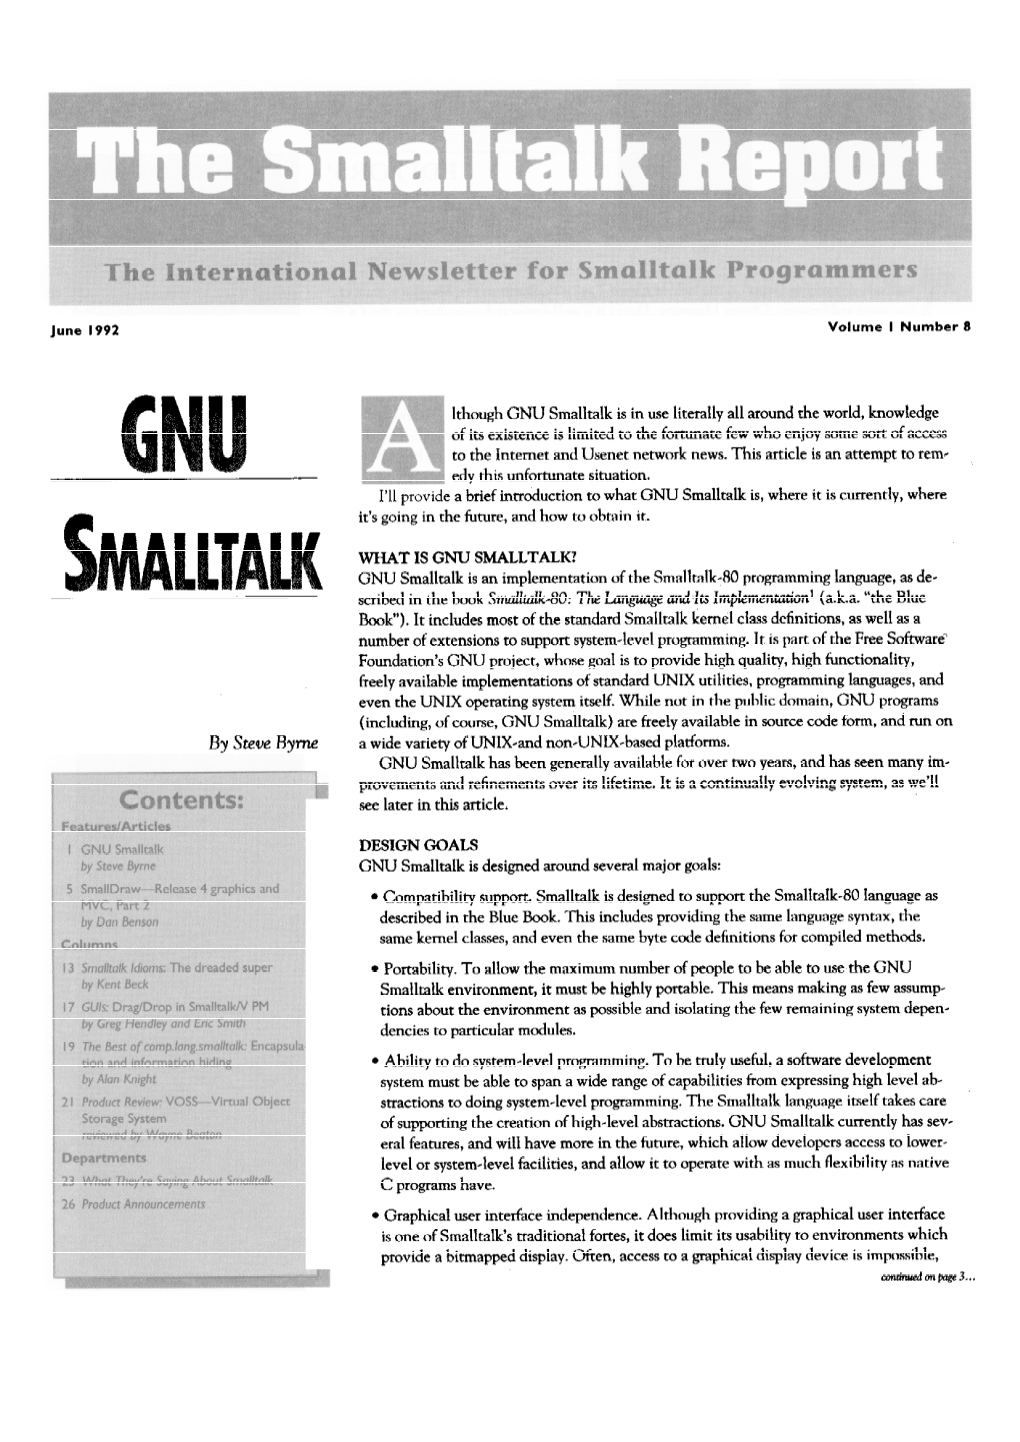 Smalltalk Volume 1 Issue 8